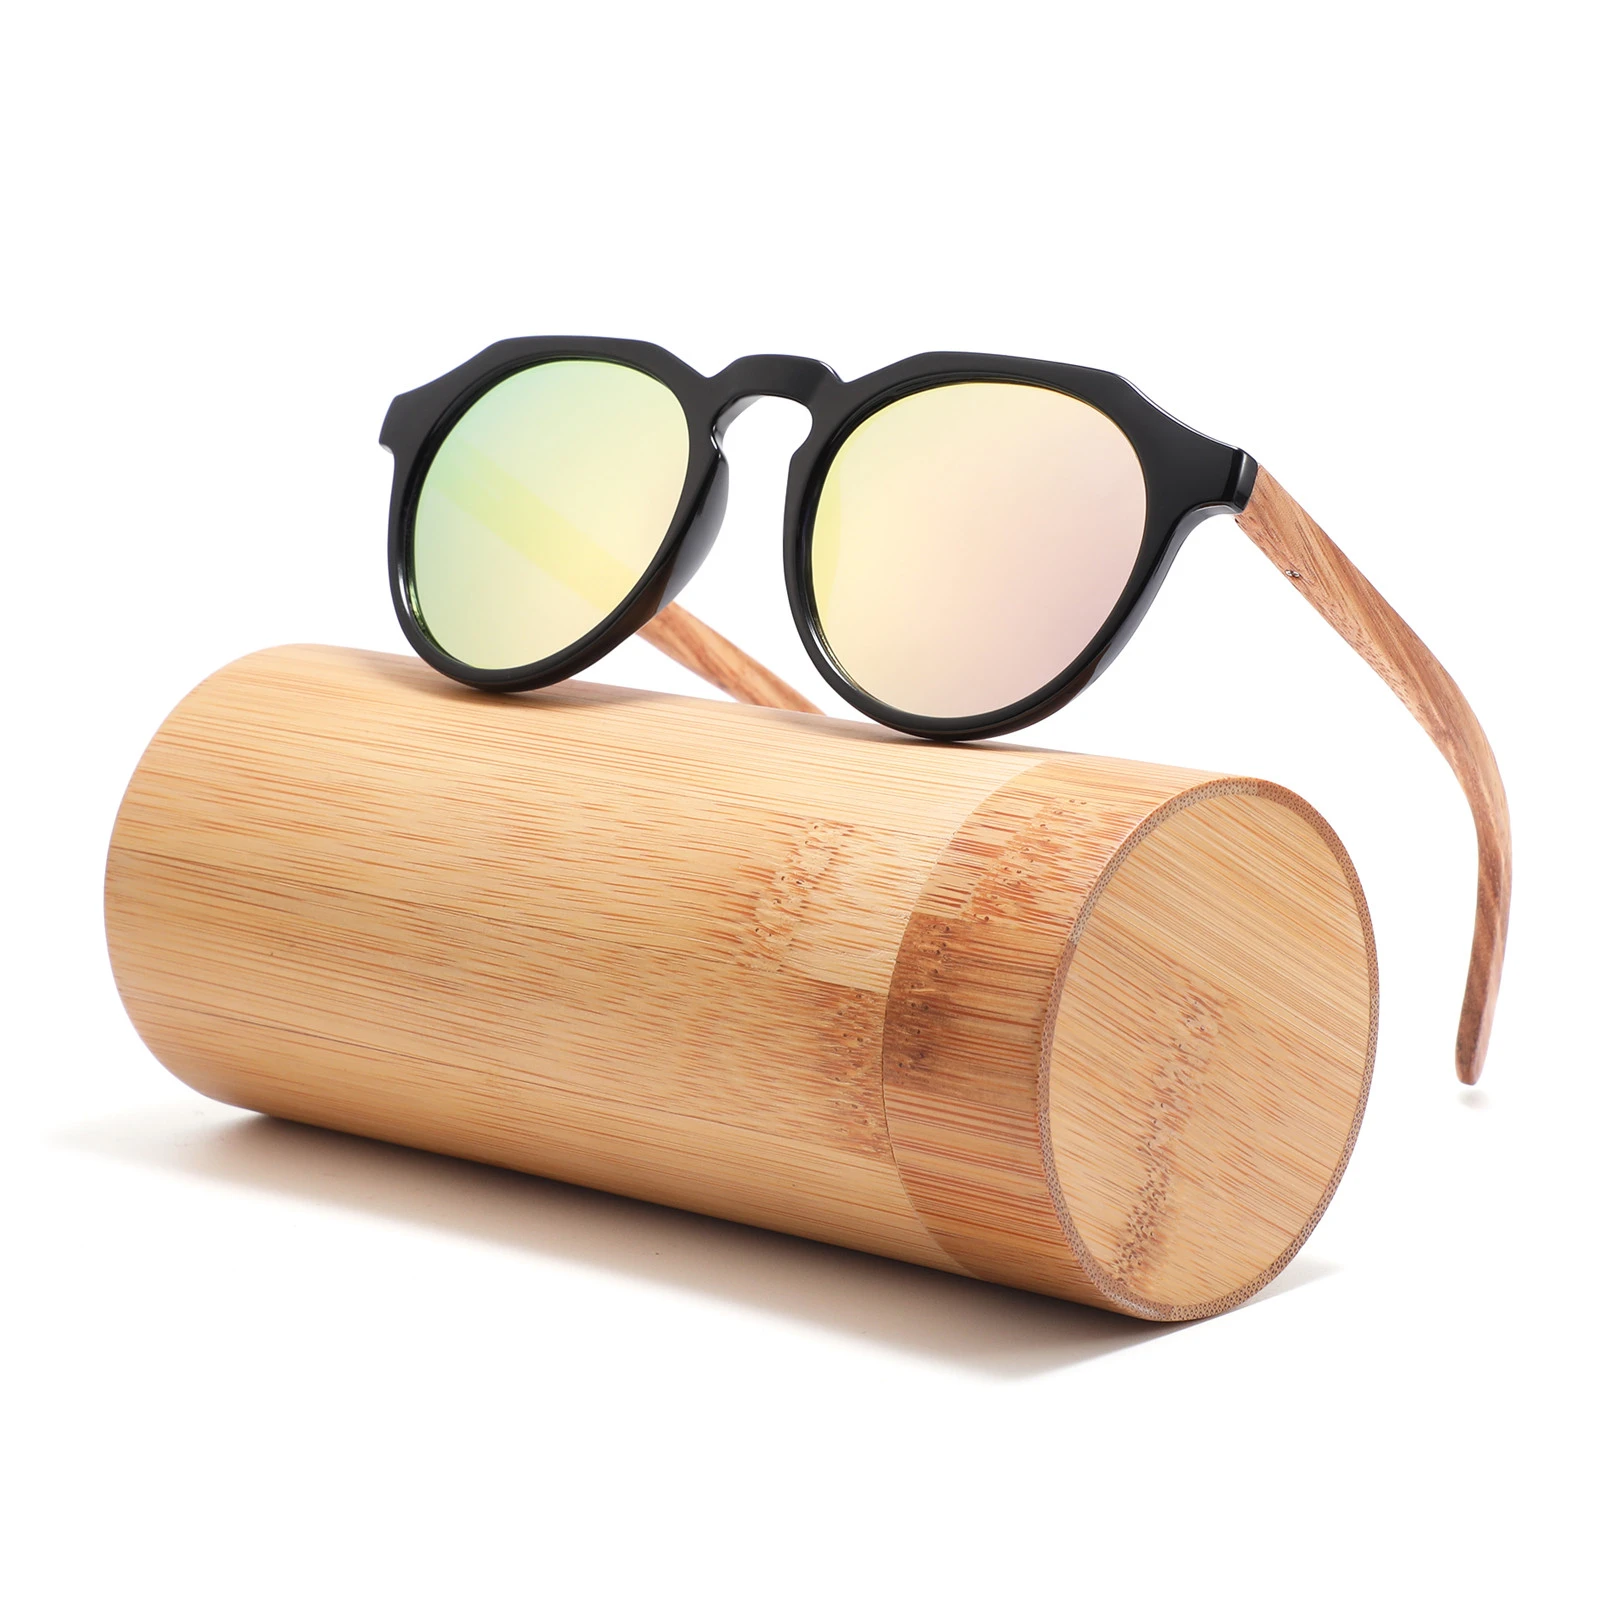 2020 hot selling sun glasses wholesale Bamboo sunglass uv400